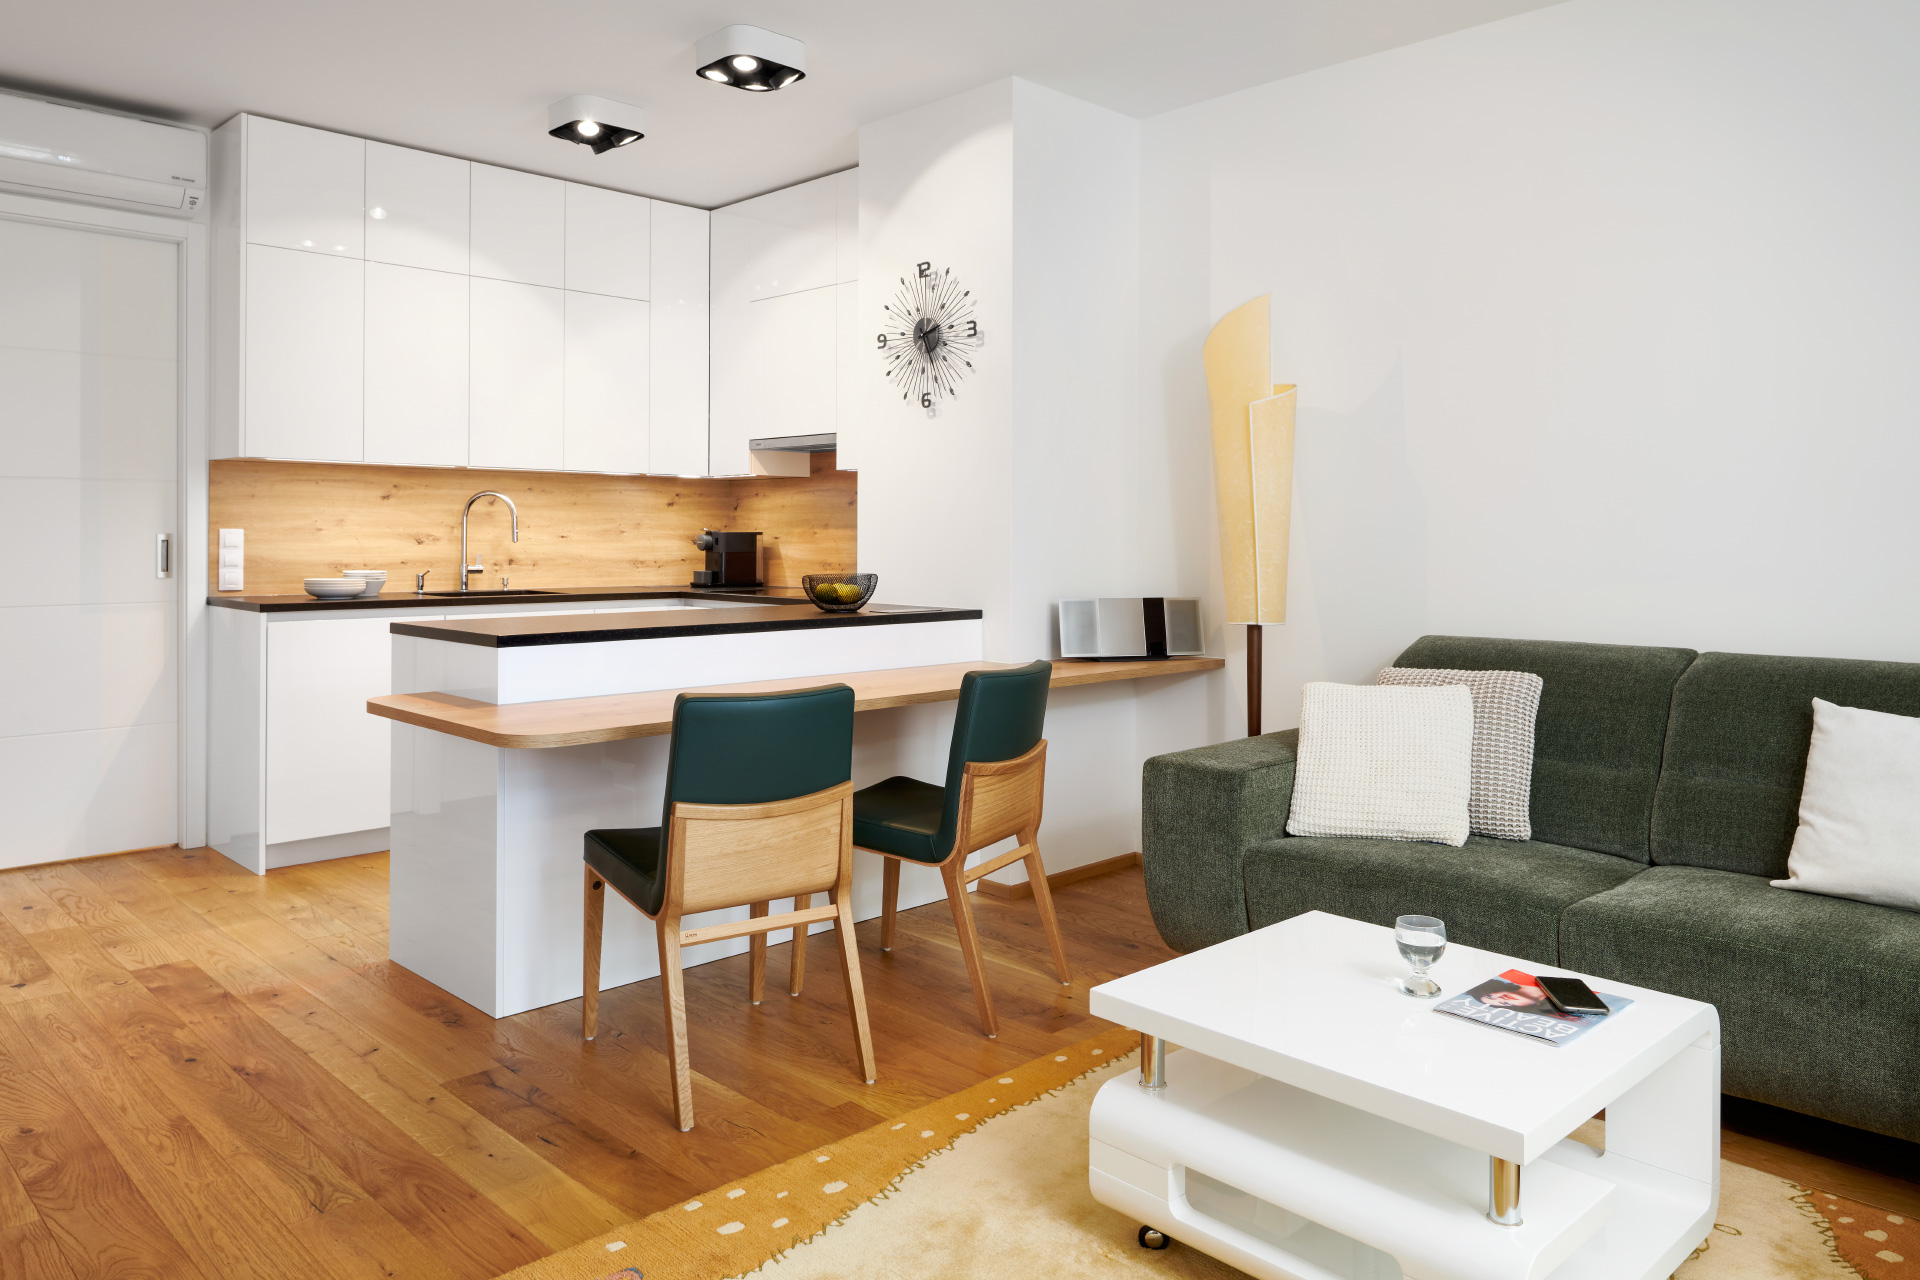 Hanák Furniture Realization of the apartment